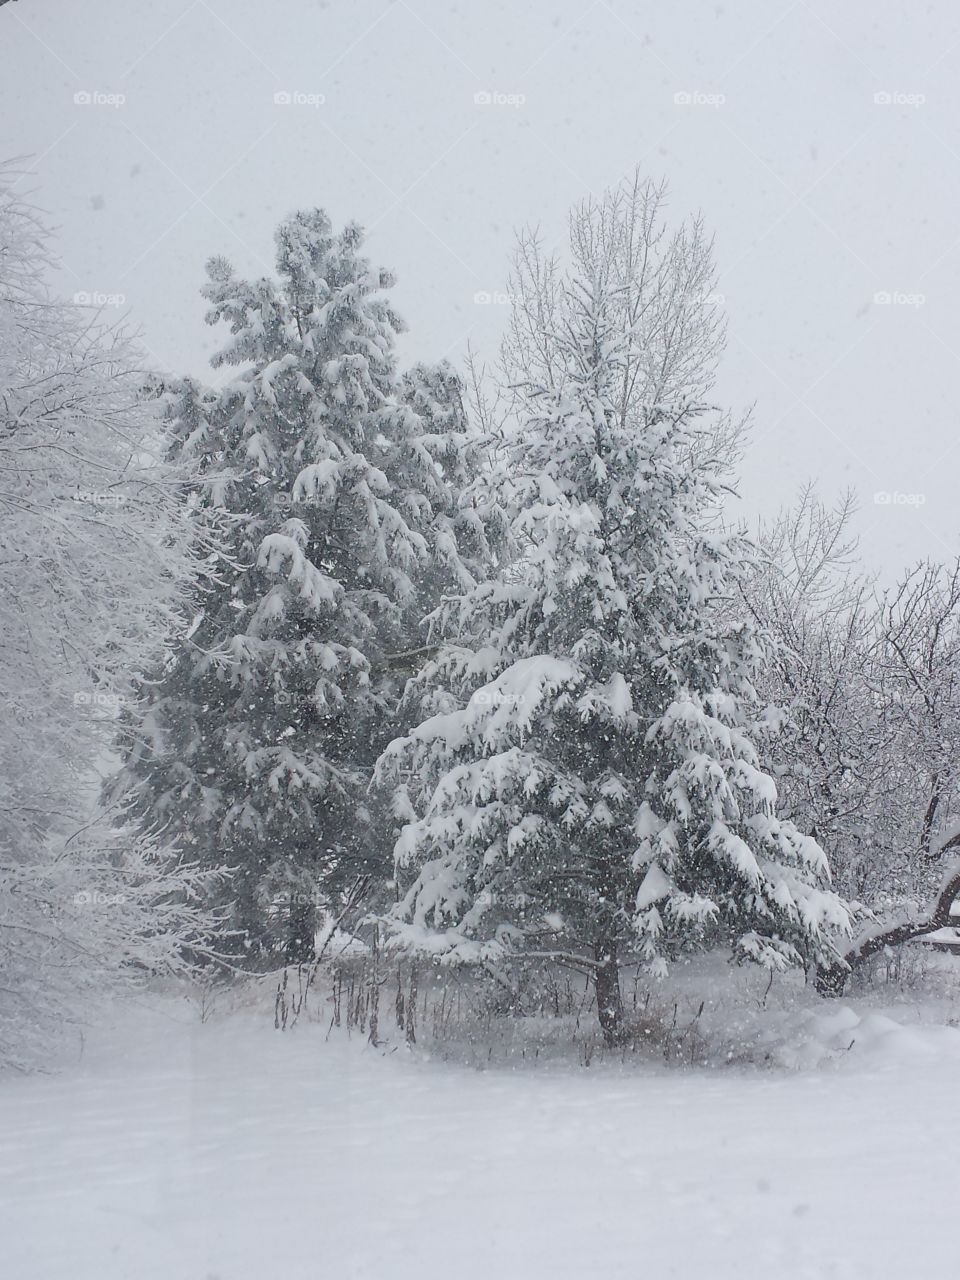 Snowing on snow laden trees